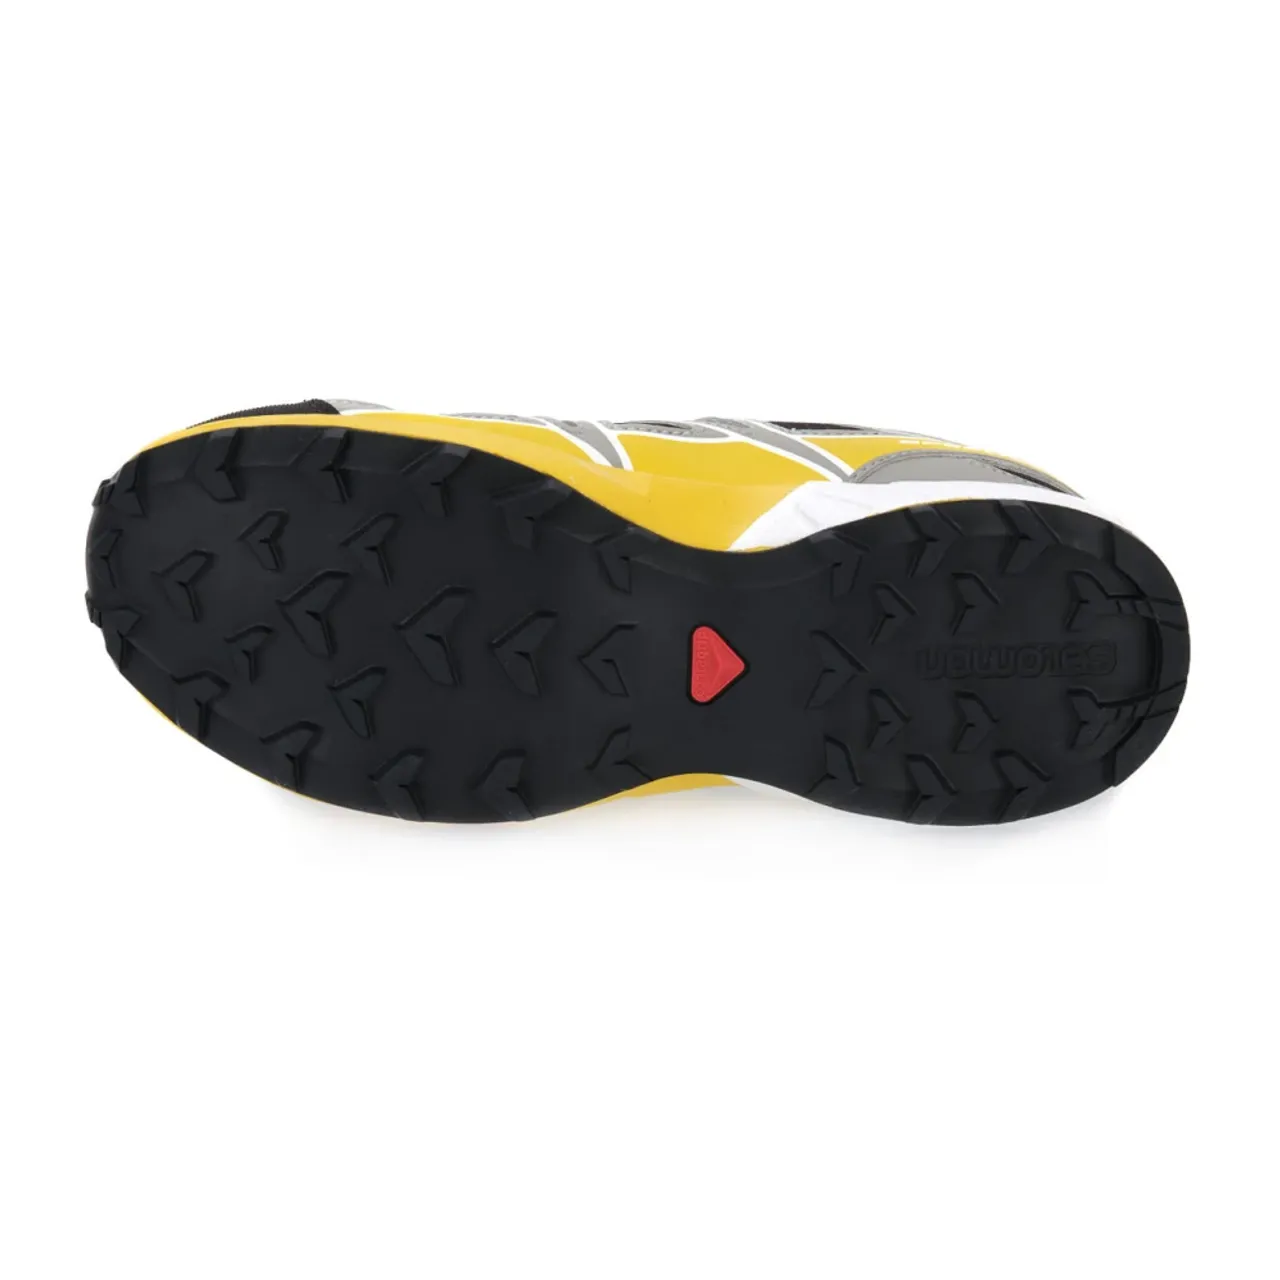 Salomon , Speedcross Cswp J Trail Running Shoes ,Black male, Sizes: